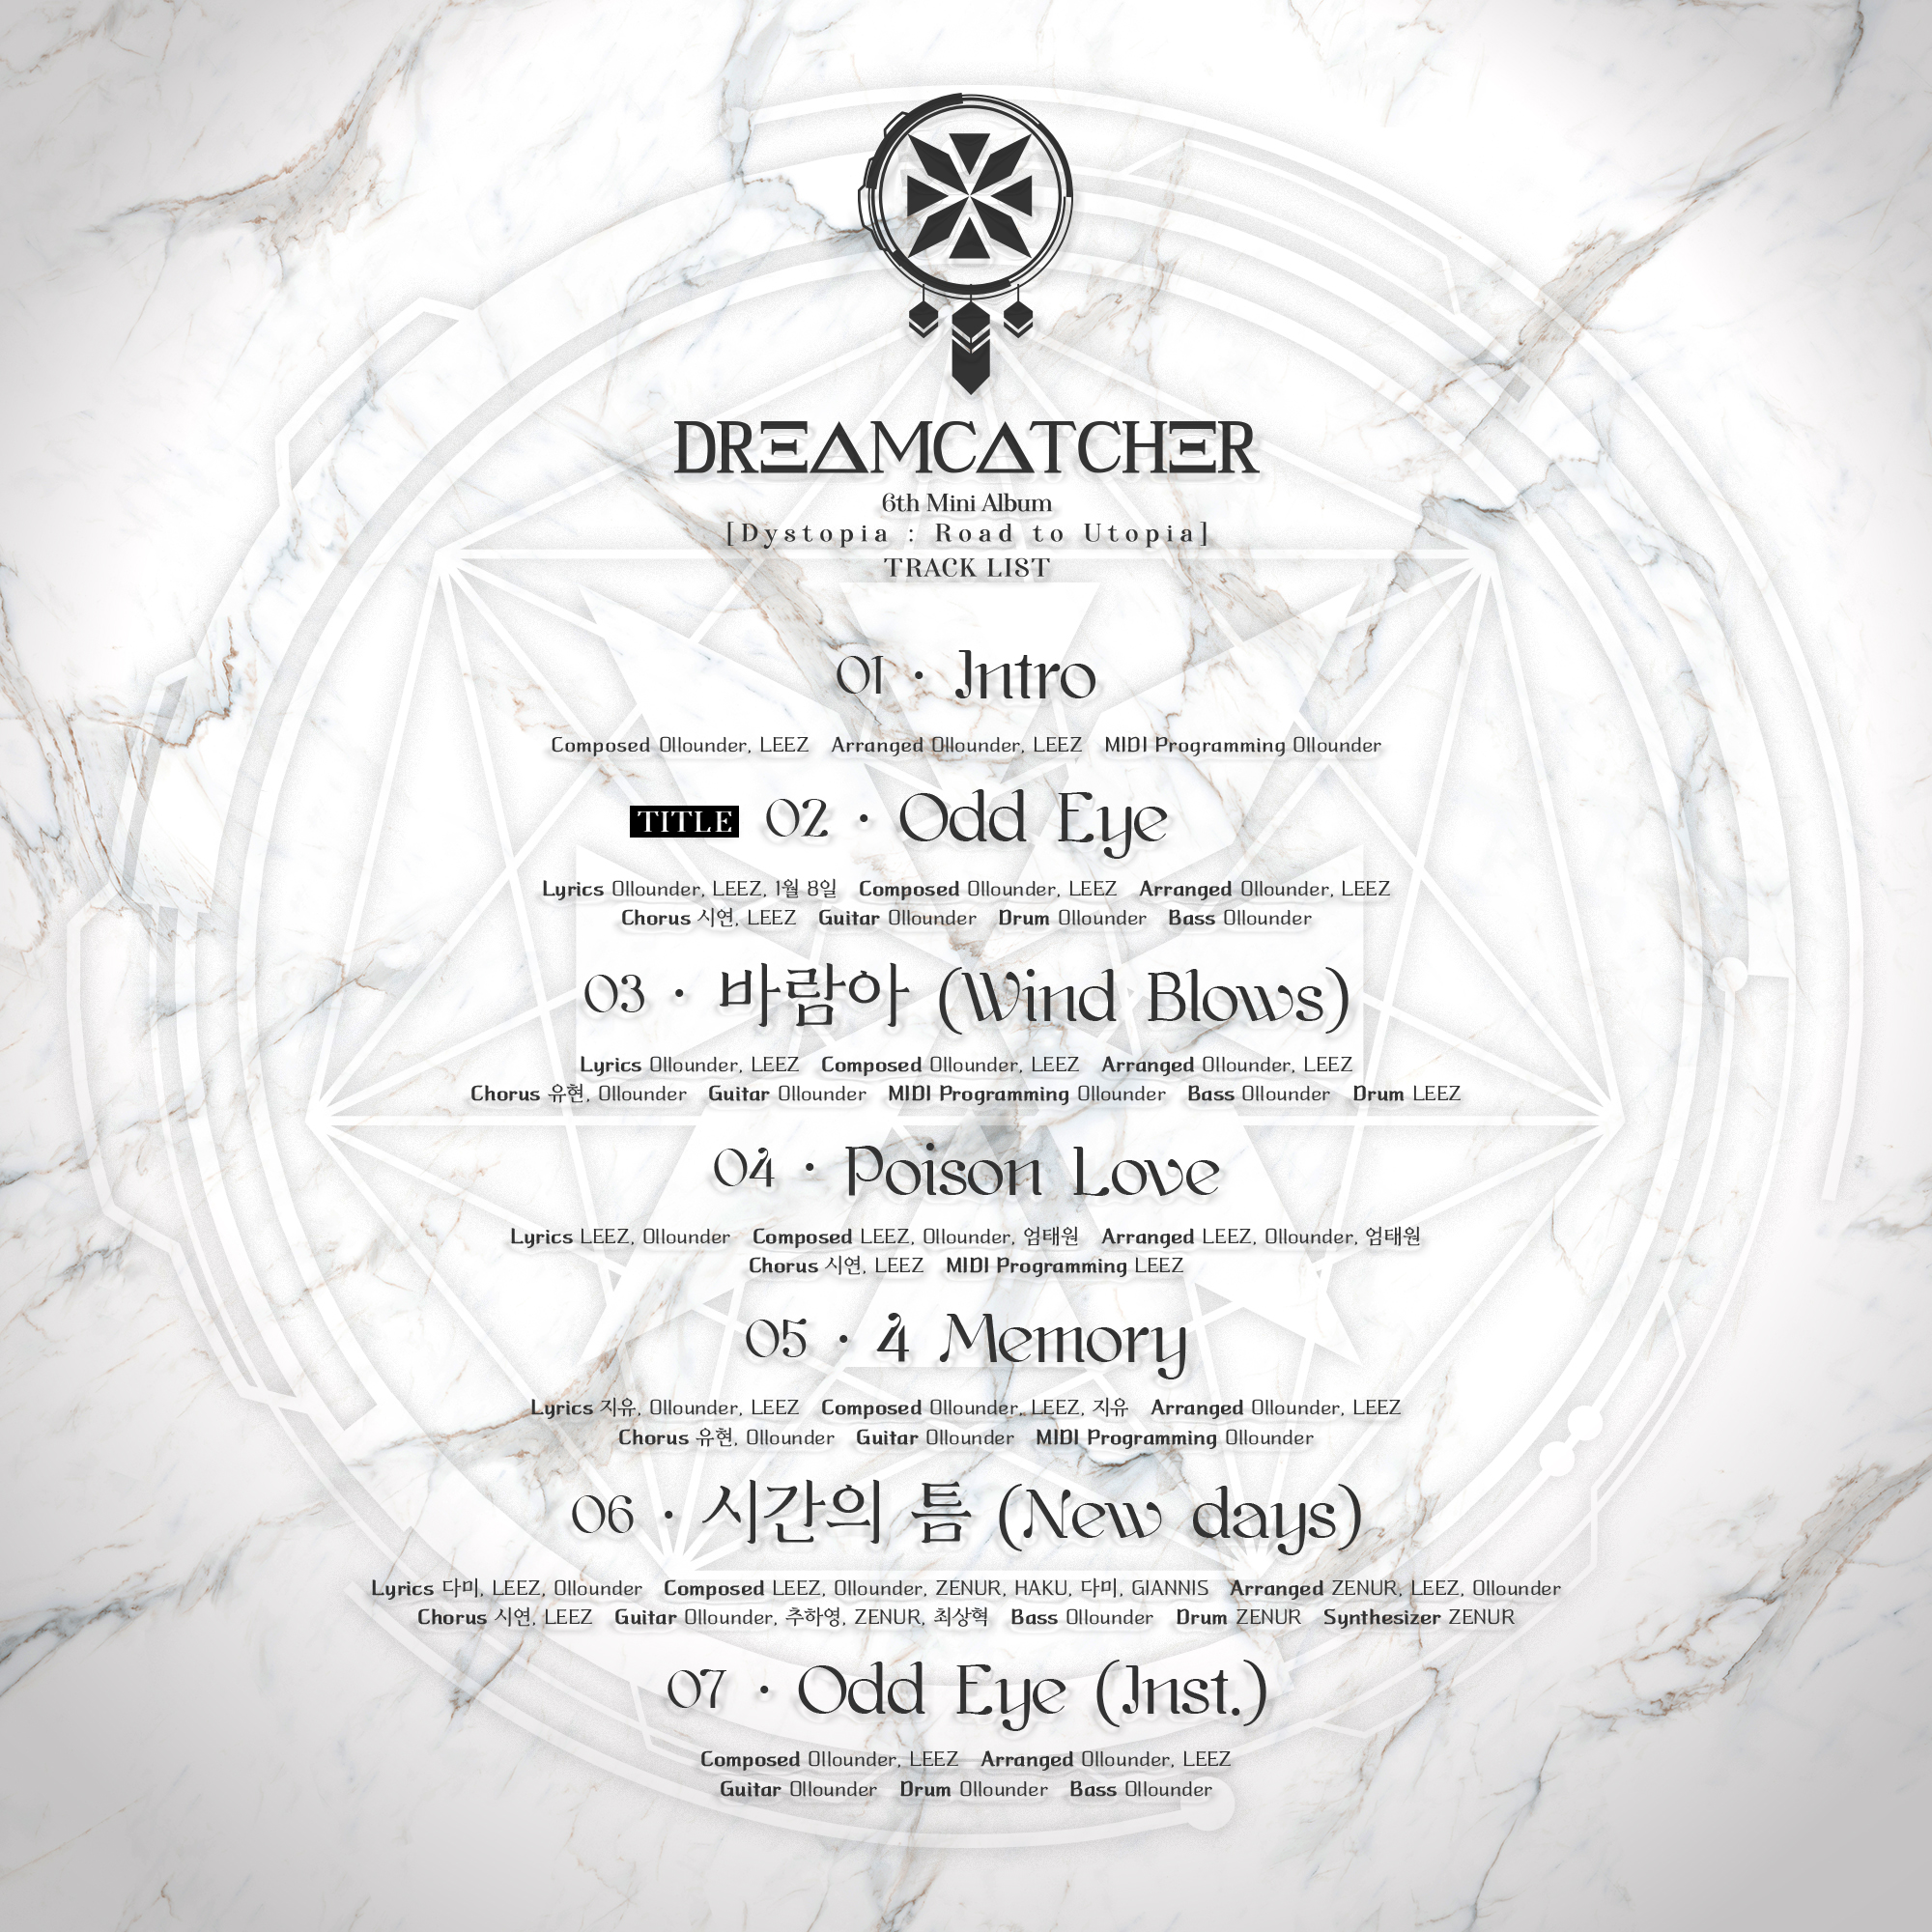 Dreamcatcher(드림캐쳐) 6th Mini Album [Dystopia : Road to Utopia] Track List ( 1월 26일 컴백 )